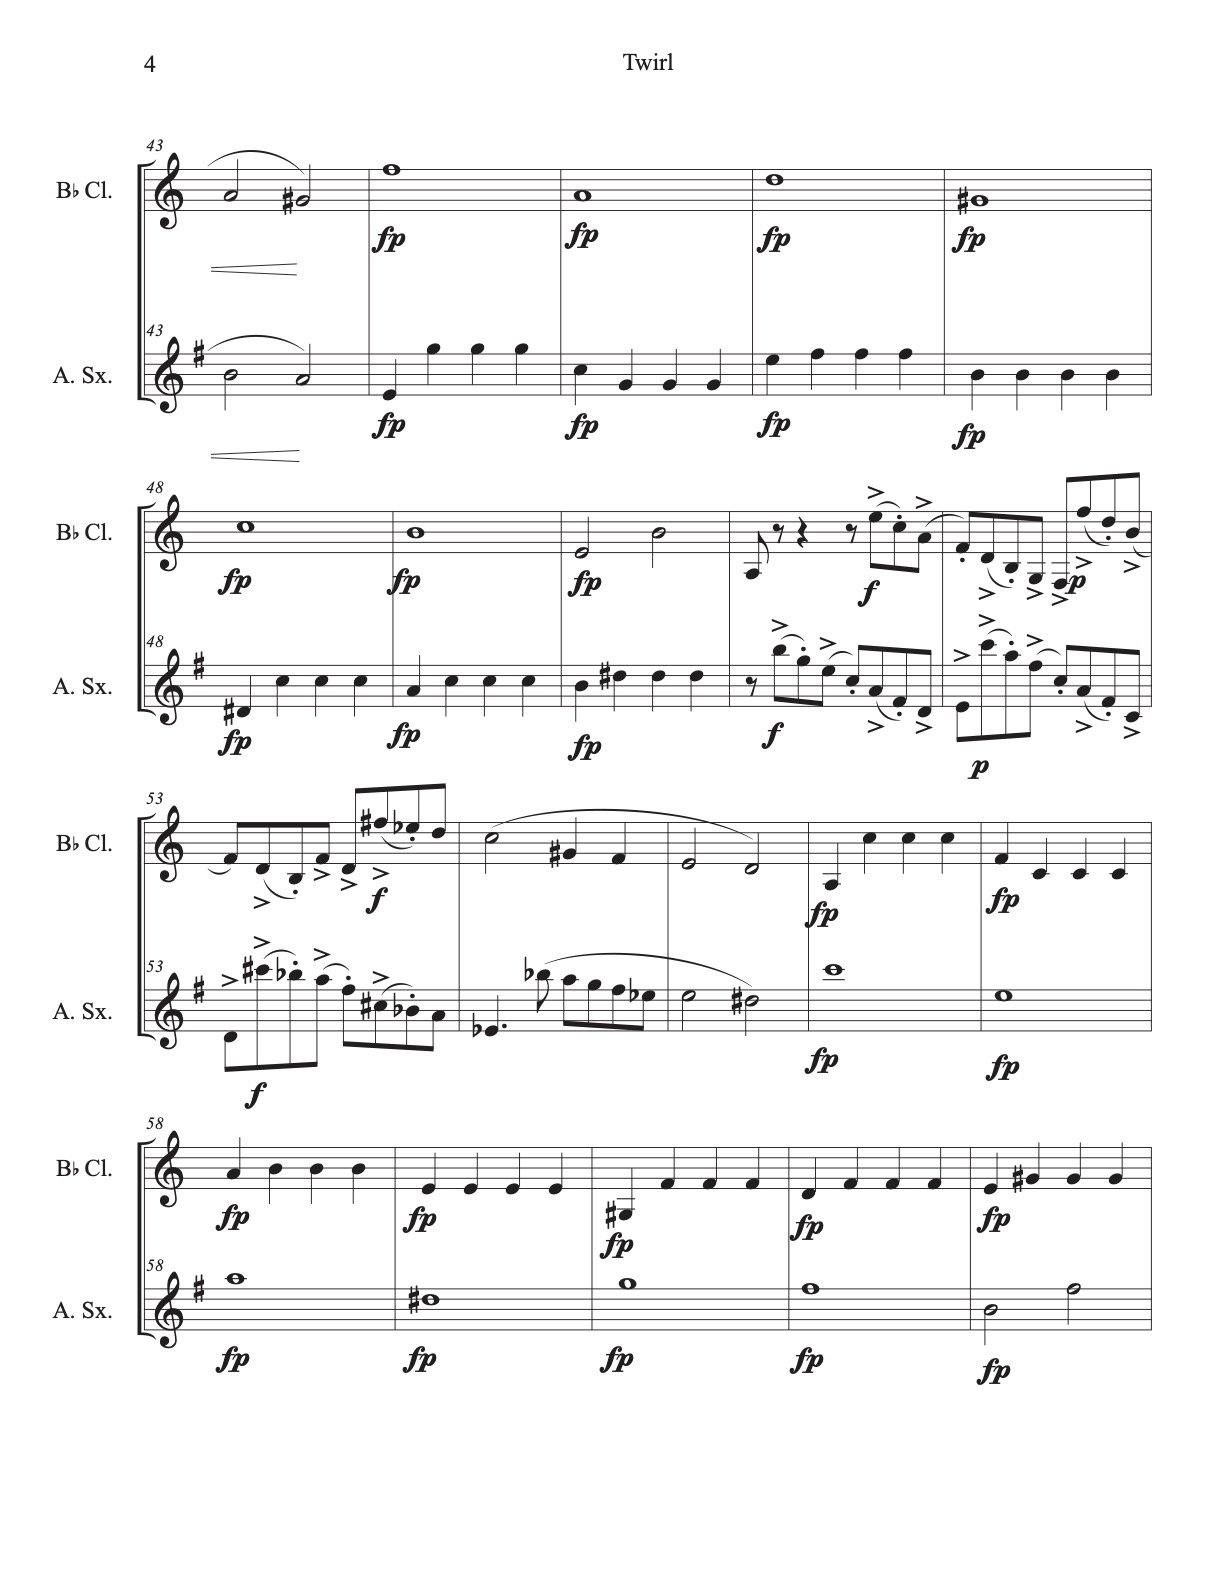 Twirl for BbClarinet and Alto Saxophone Duet (score+parts) - ChaipruckMekara